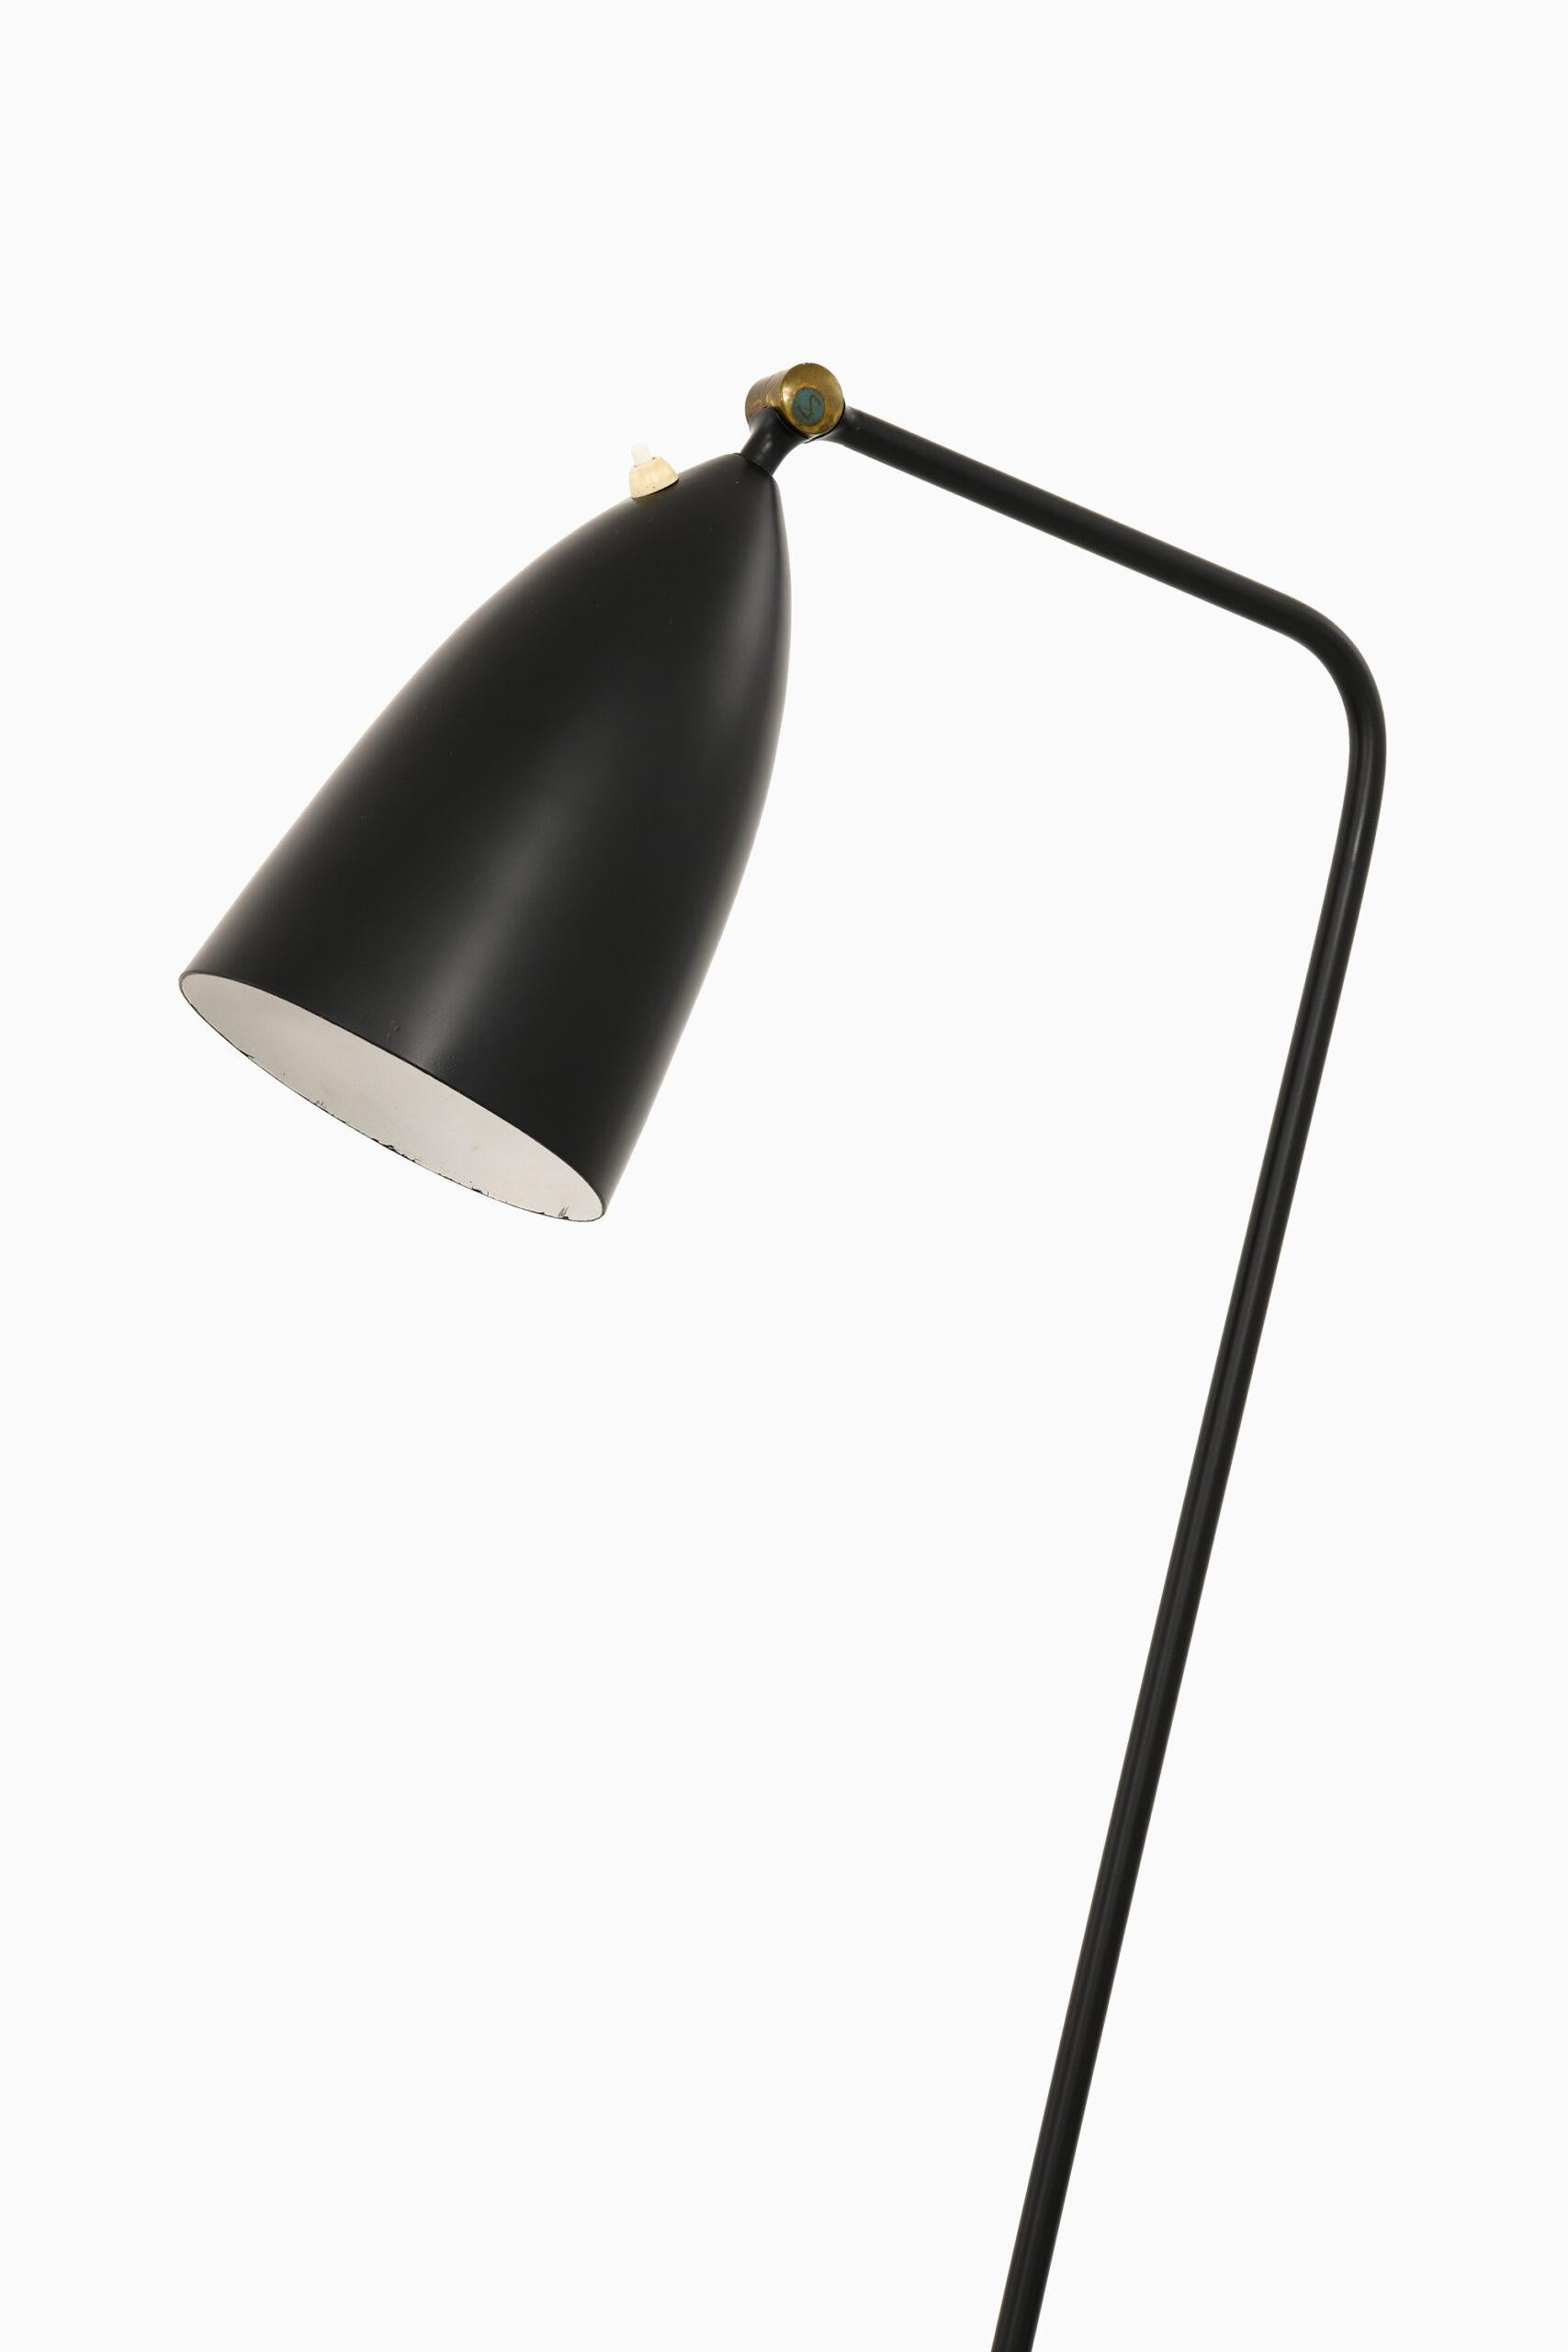 Rare floor lamp model G-33 / Grasshopper designed by Greta Magnusson Grossman. Produced by Bergboms in Sweden.